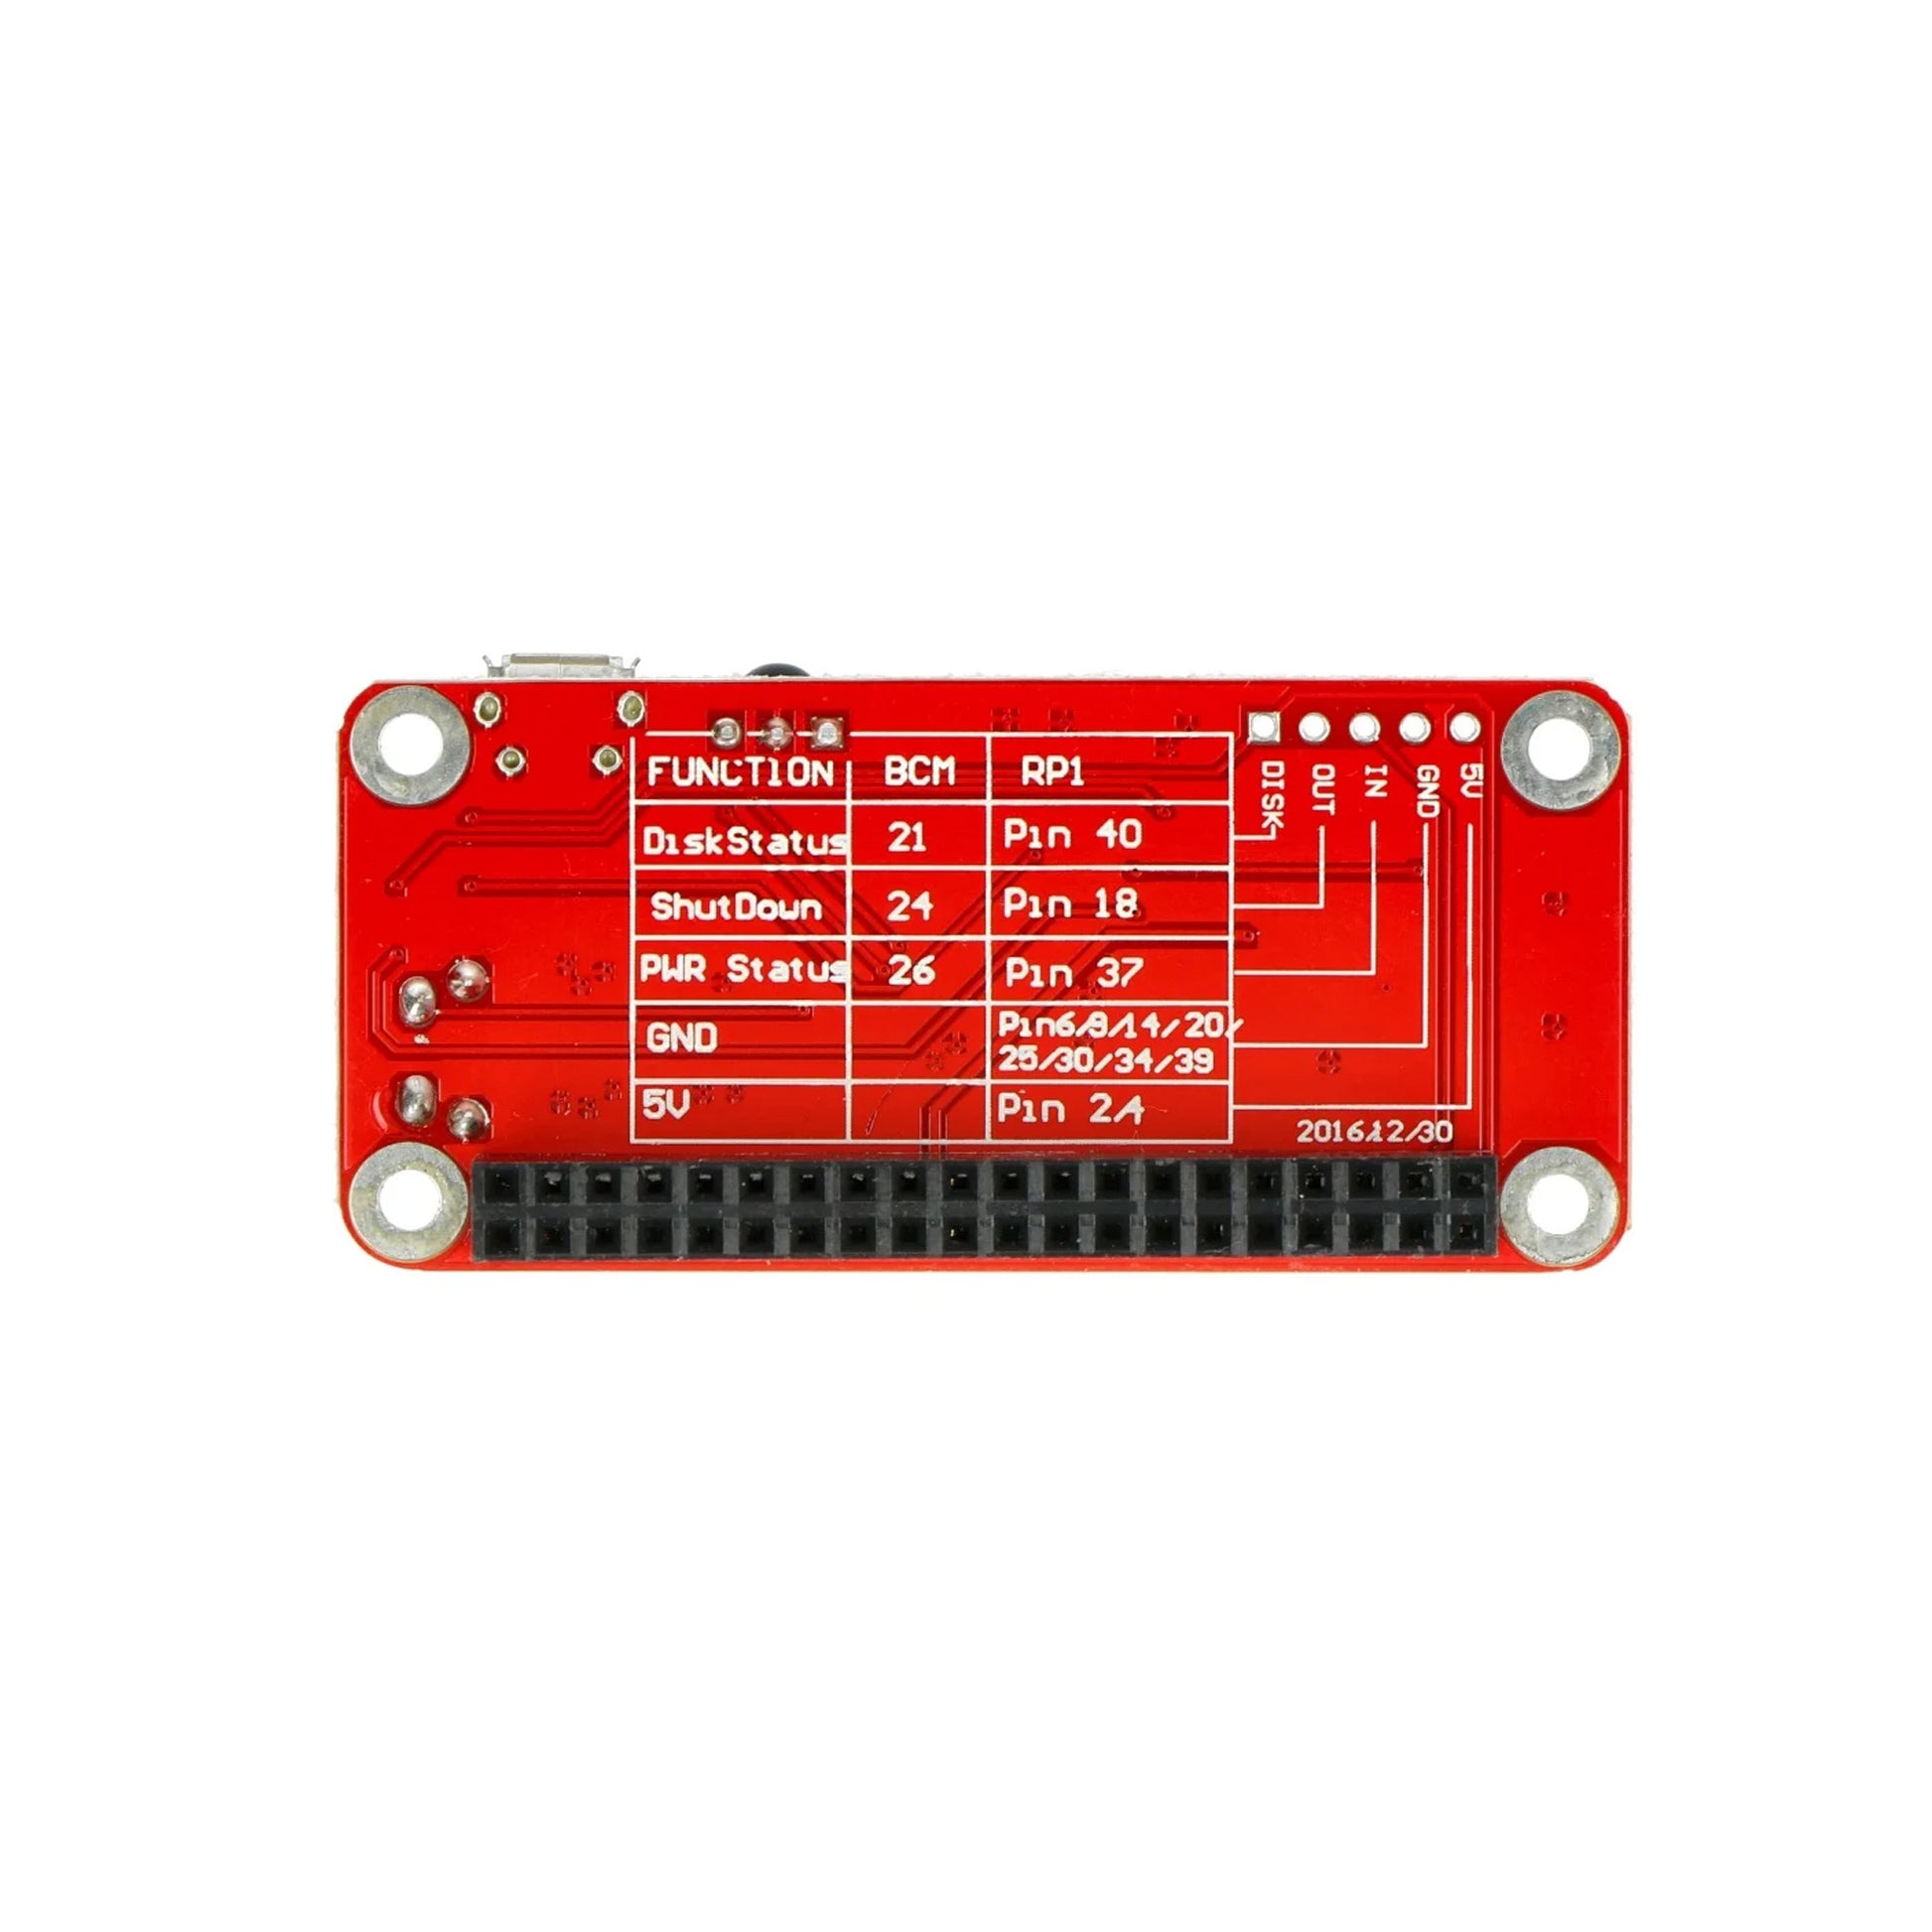 IR Remote Control Switch Power Button Module For Raspberry Pi Raspberry Pi 3 2 Model B Pi B+ A+ Zero, Remote Control Module - RS1016 - REES52